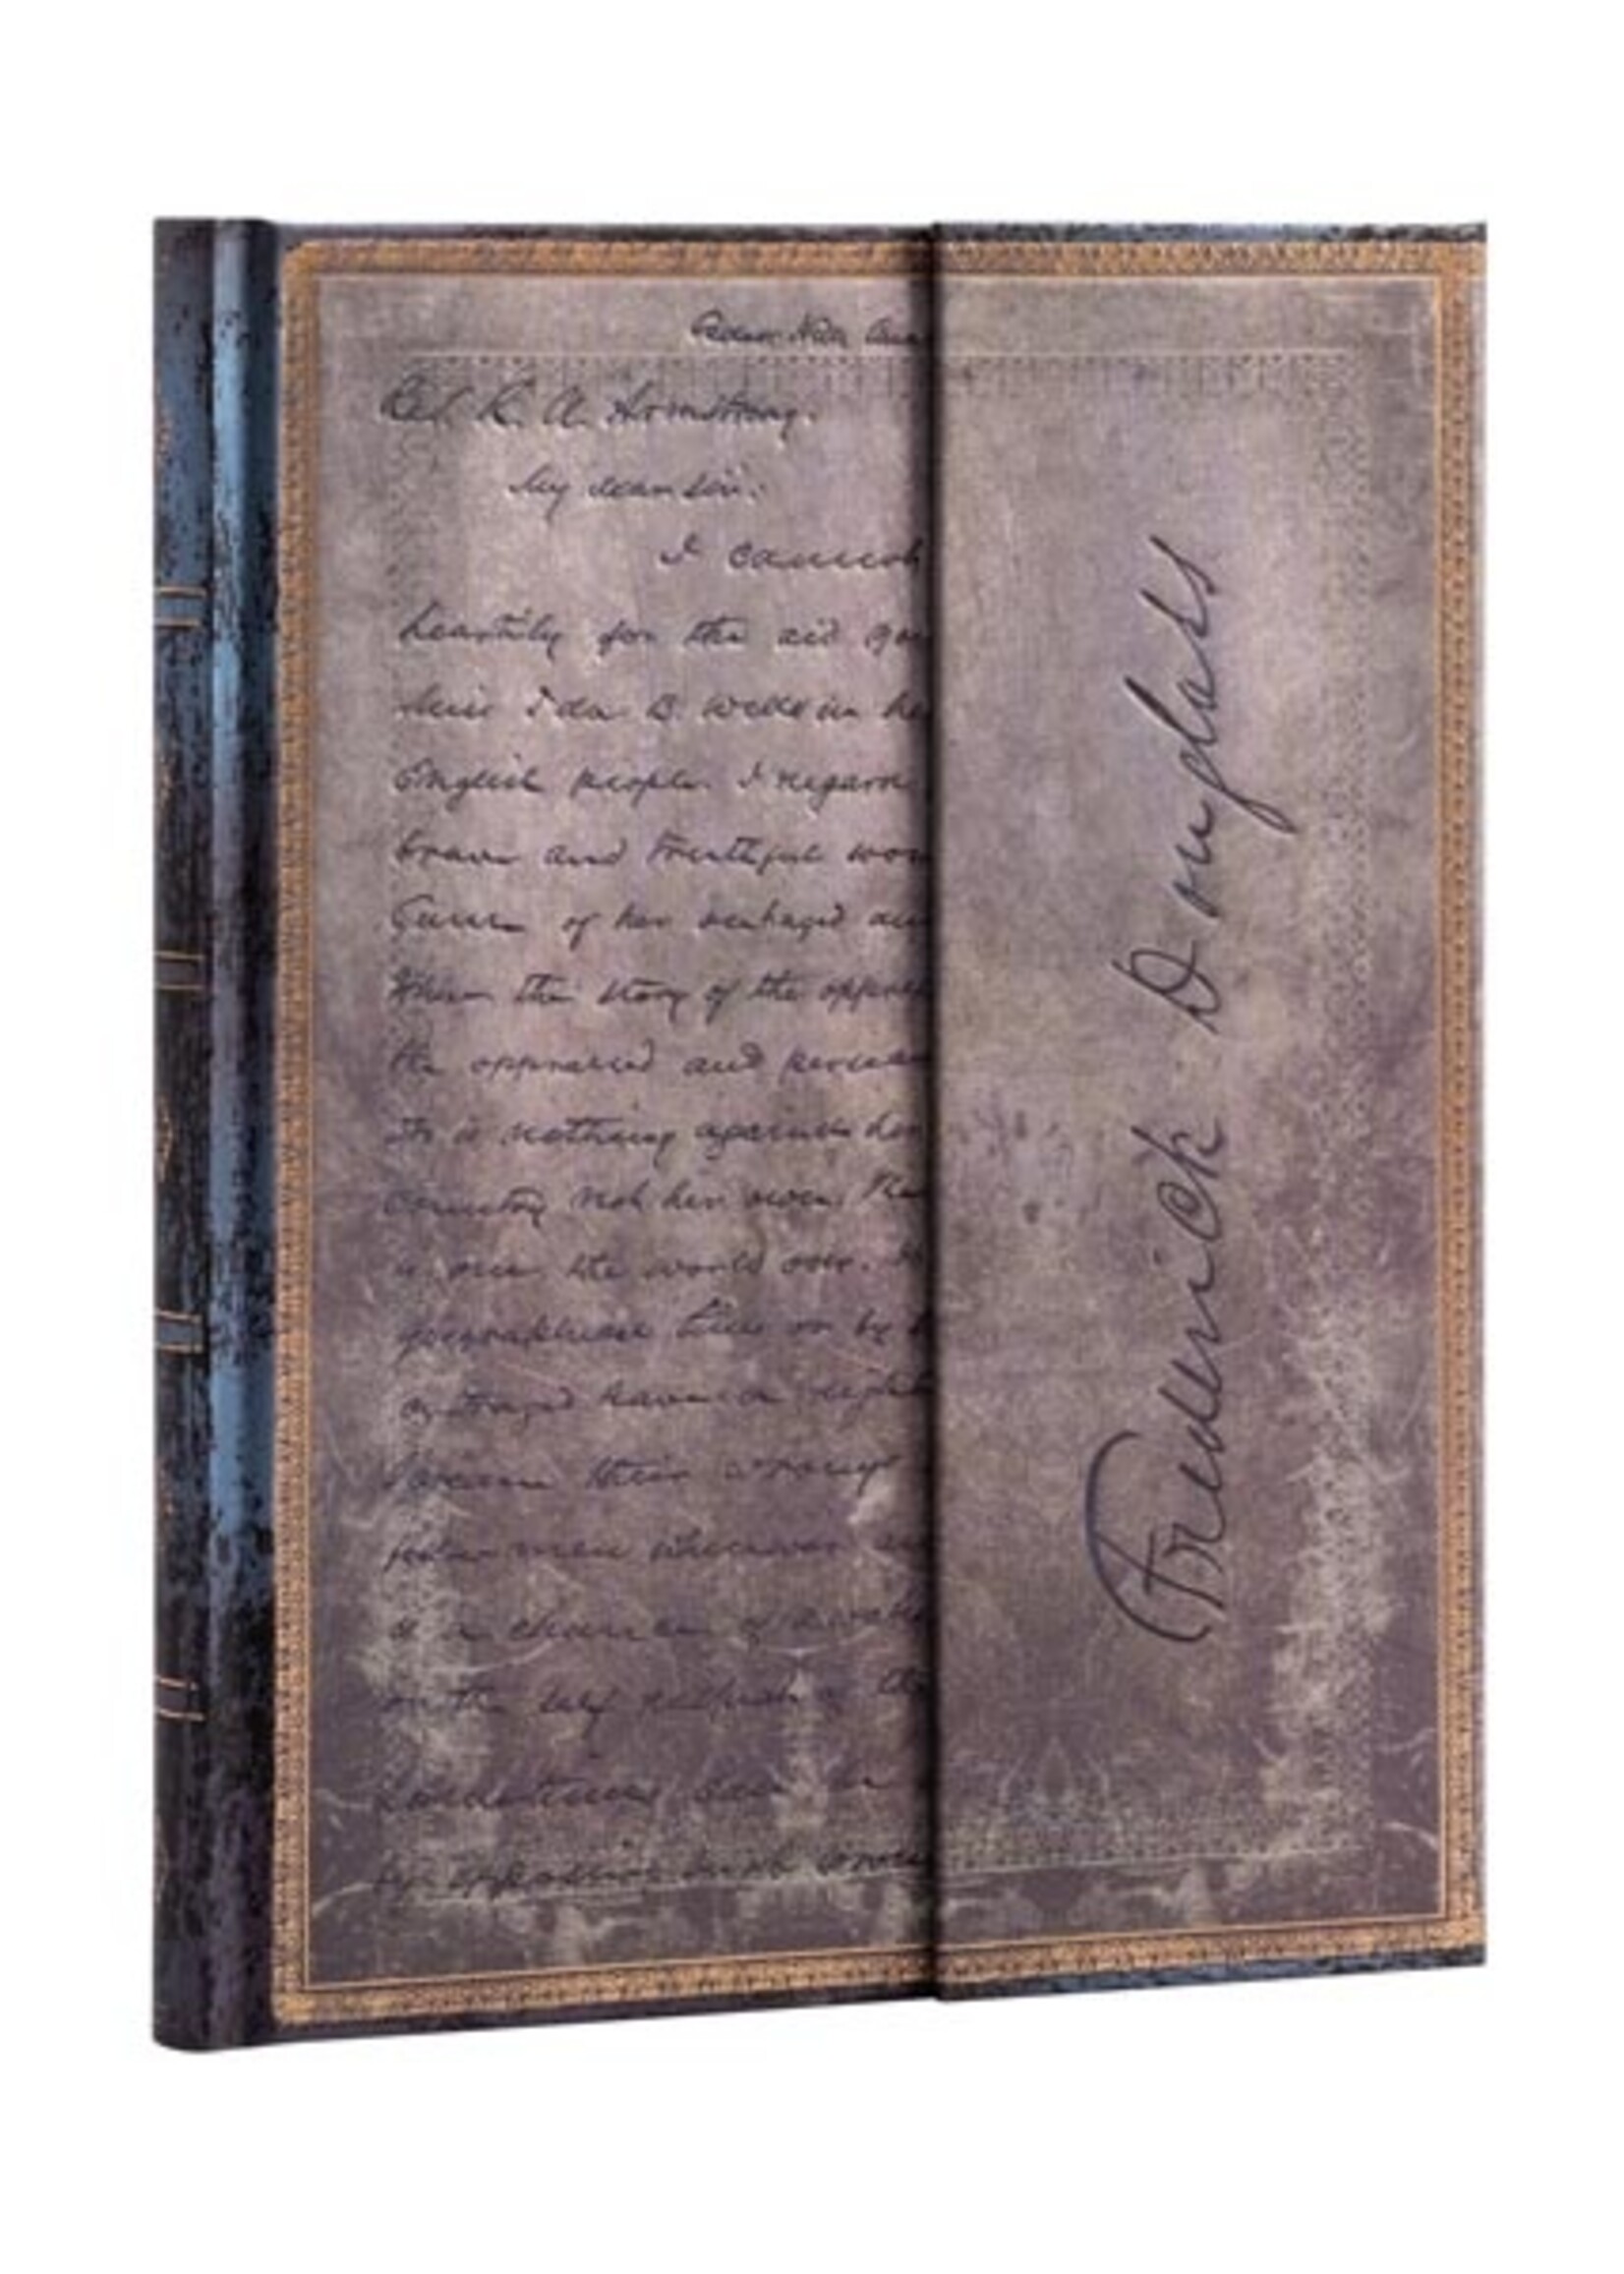 Paperblanks Notebook Ultra A5 Gelijnd Embellished Manuscripts Collection / Frederick Douglass, Letter for Civil Rights